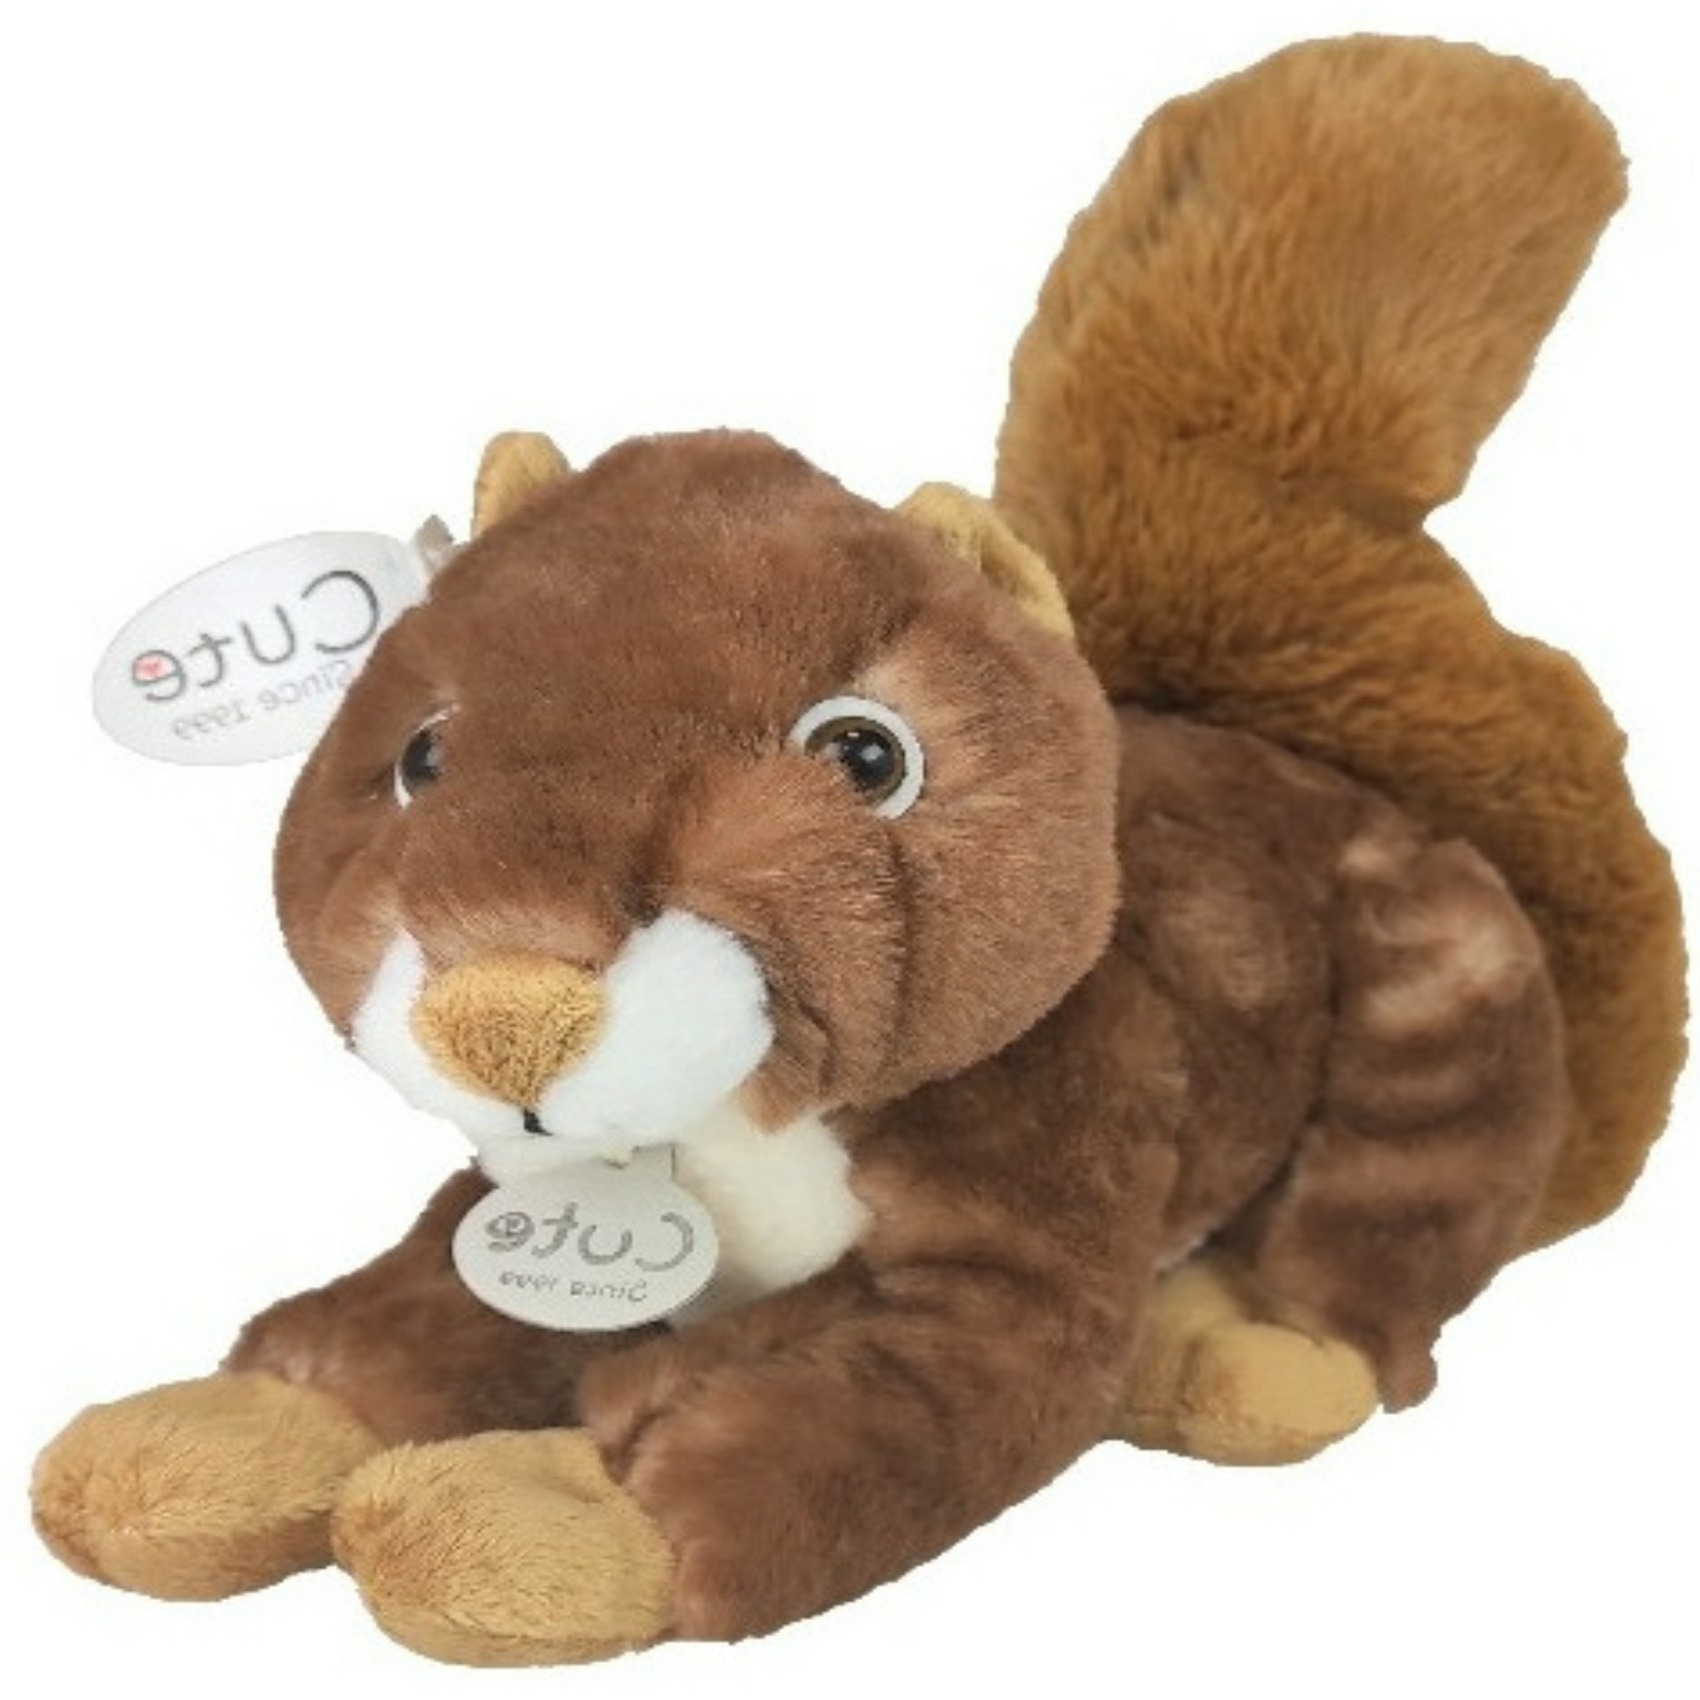 Inware pluche eekhoorn knuffeldier - rood/bruin - zittend - 25 cm -